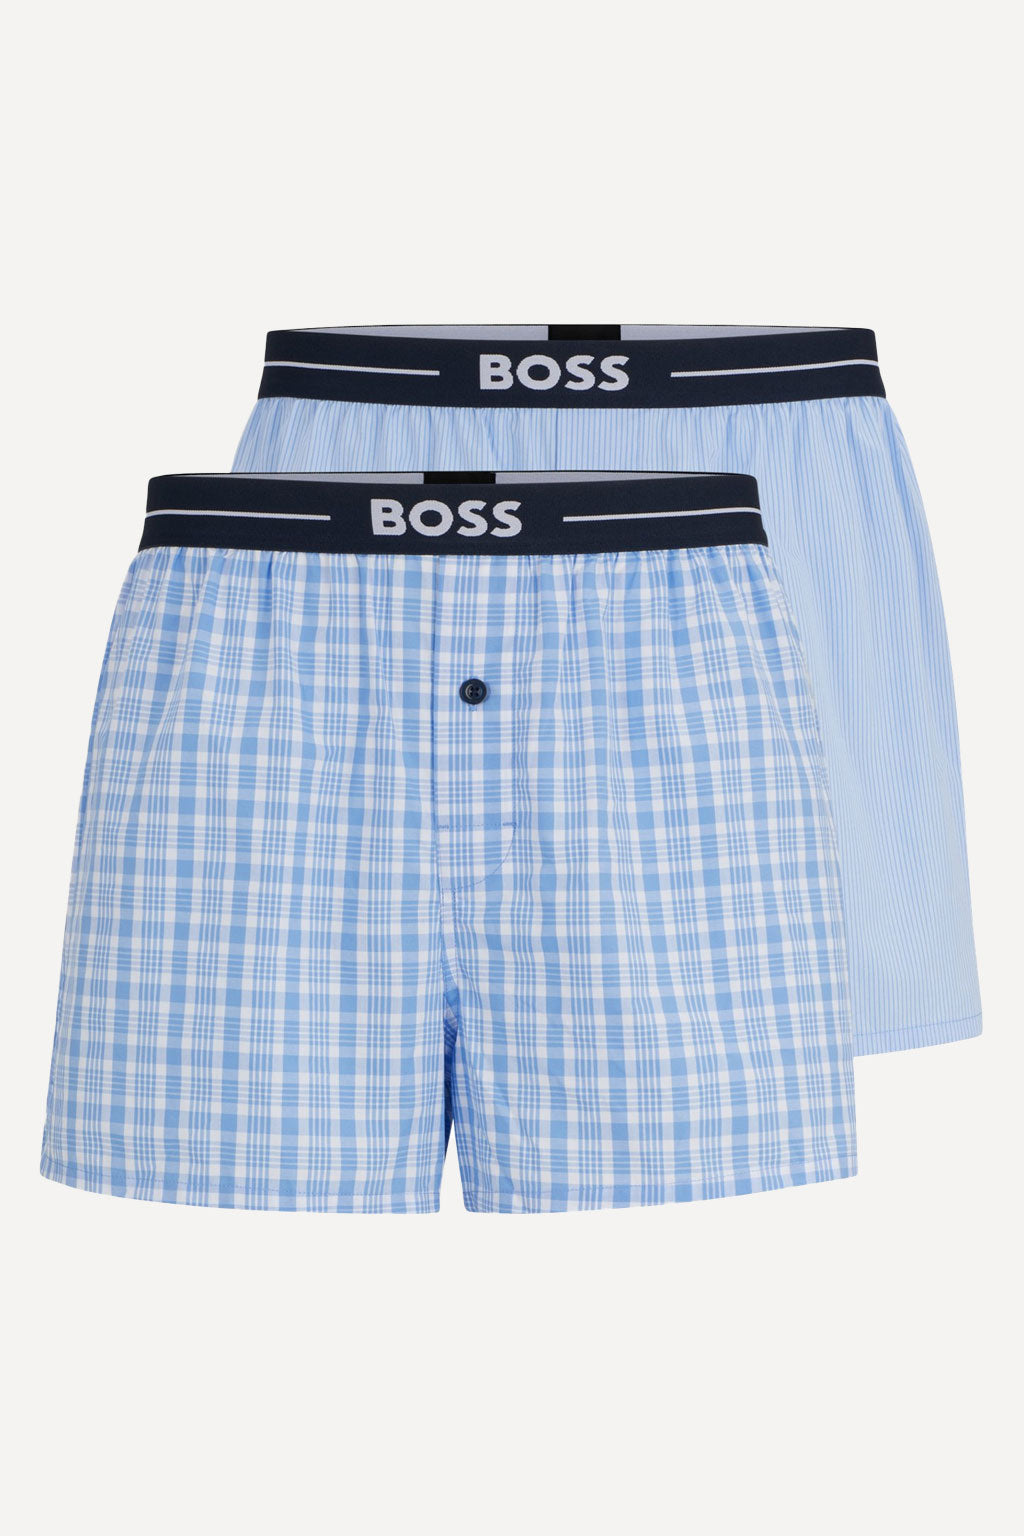 Hugo Boss underwear